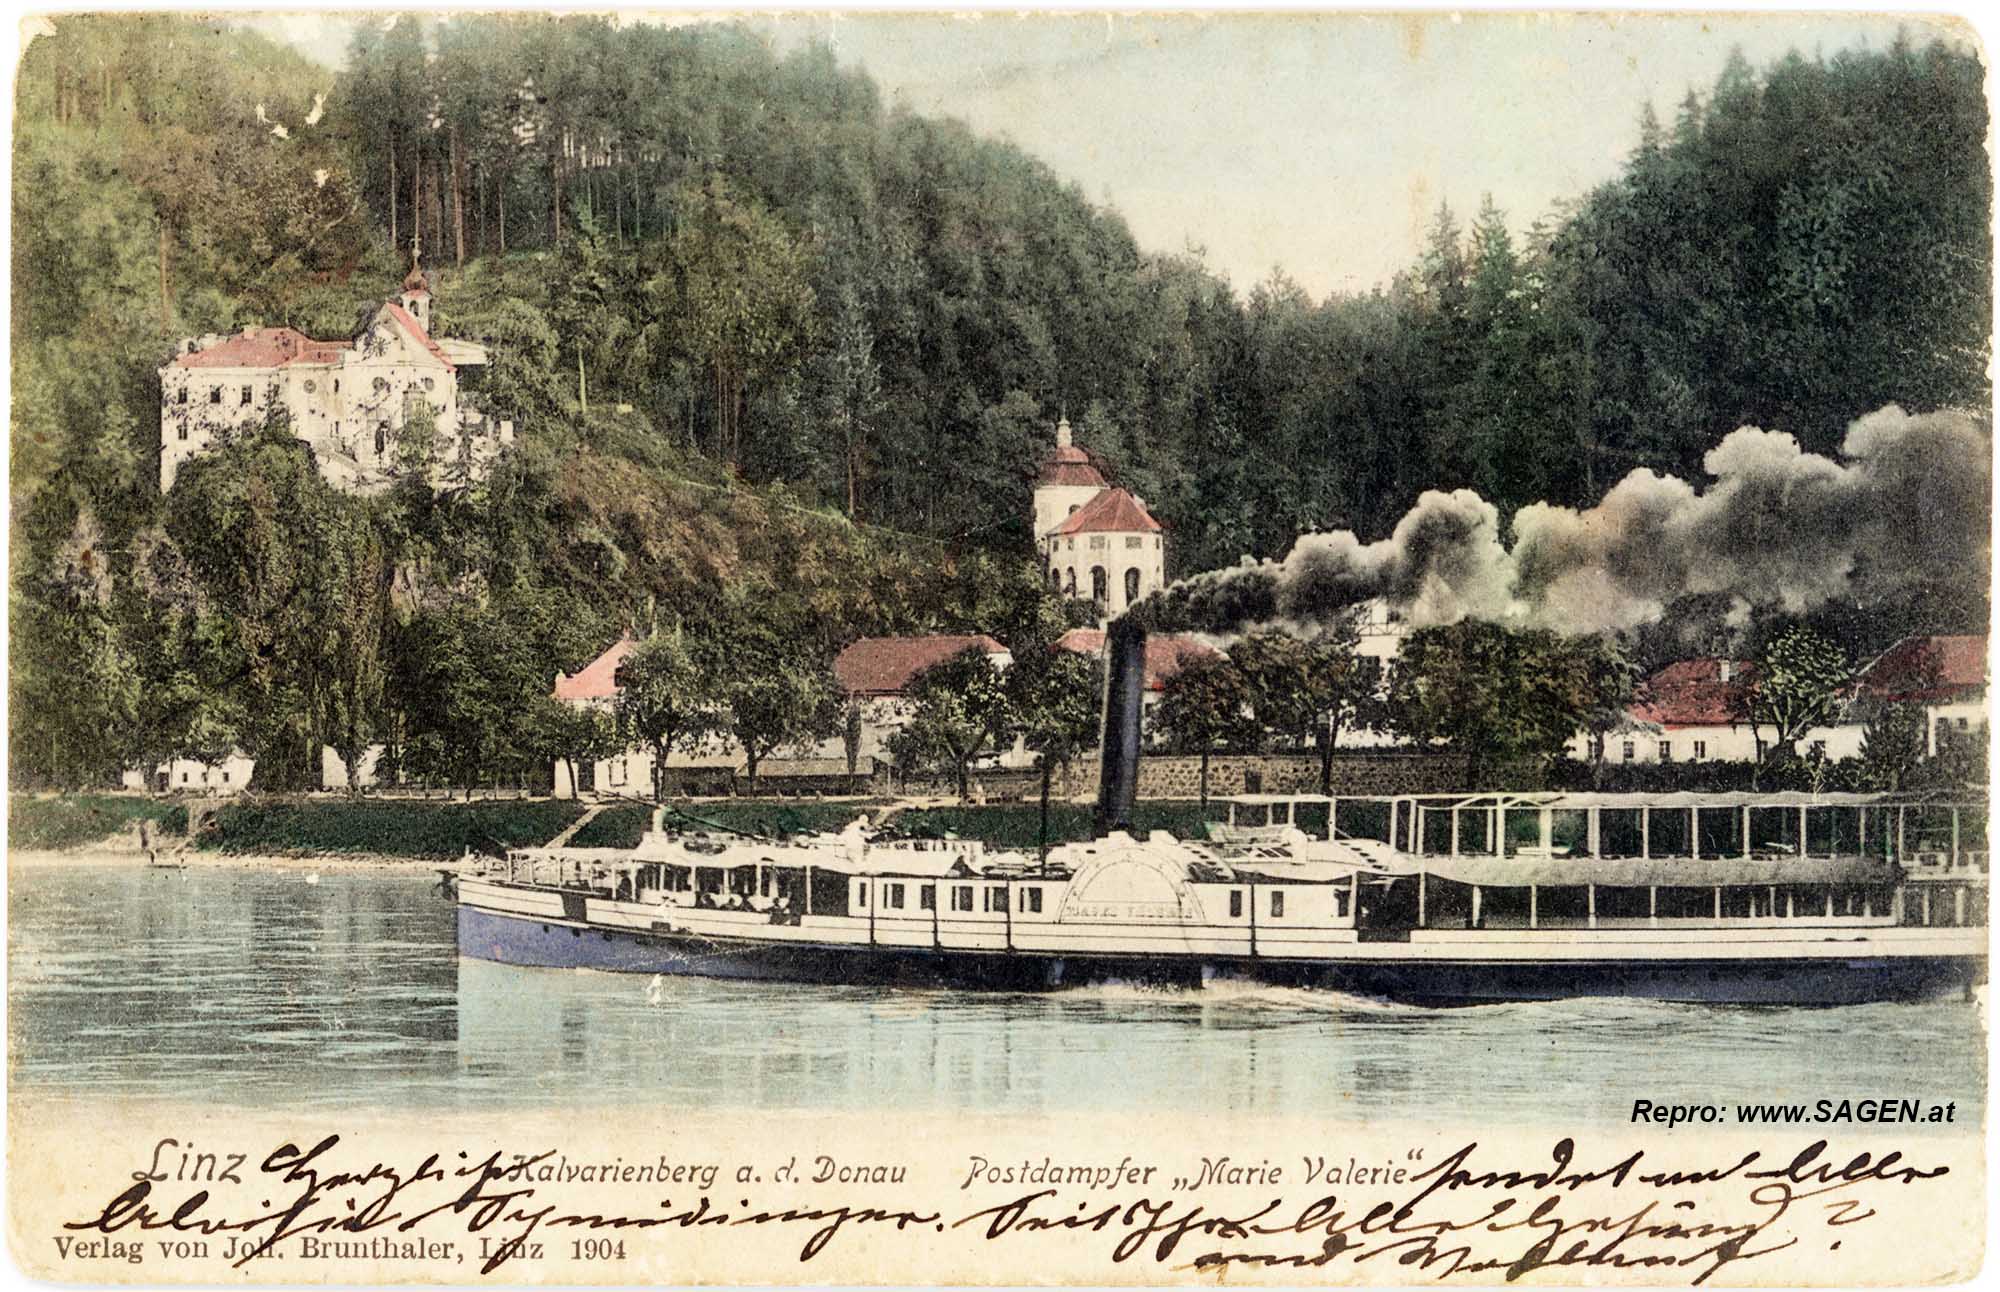 Linz Kalvarienberg 1904, Postdampfer "Marie Valerie"